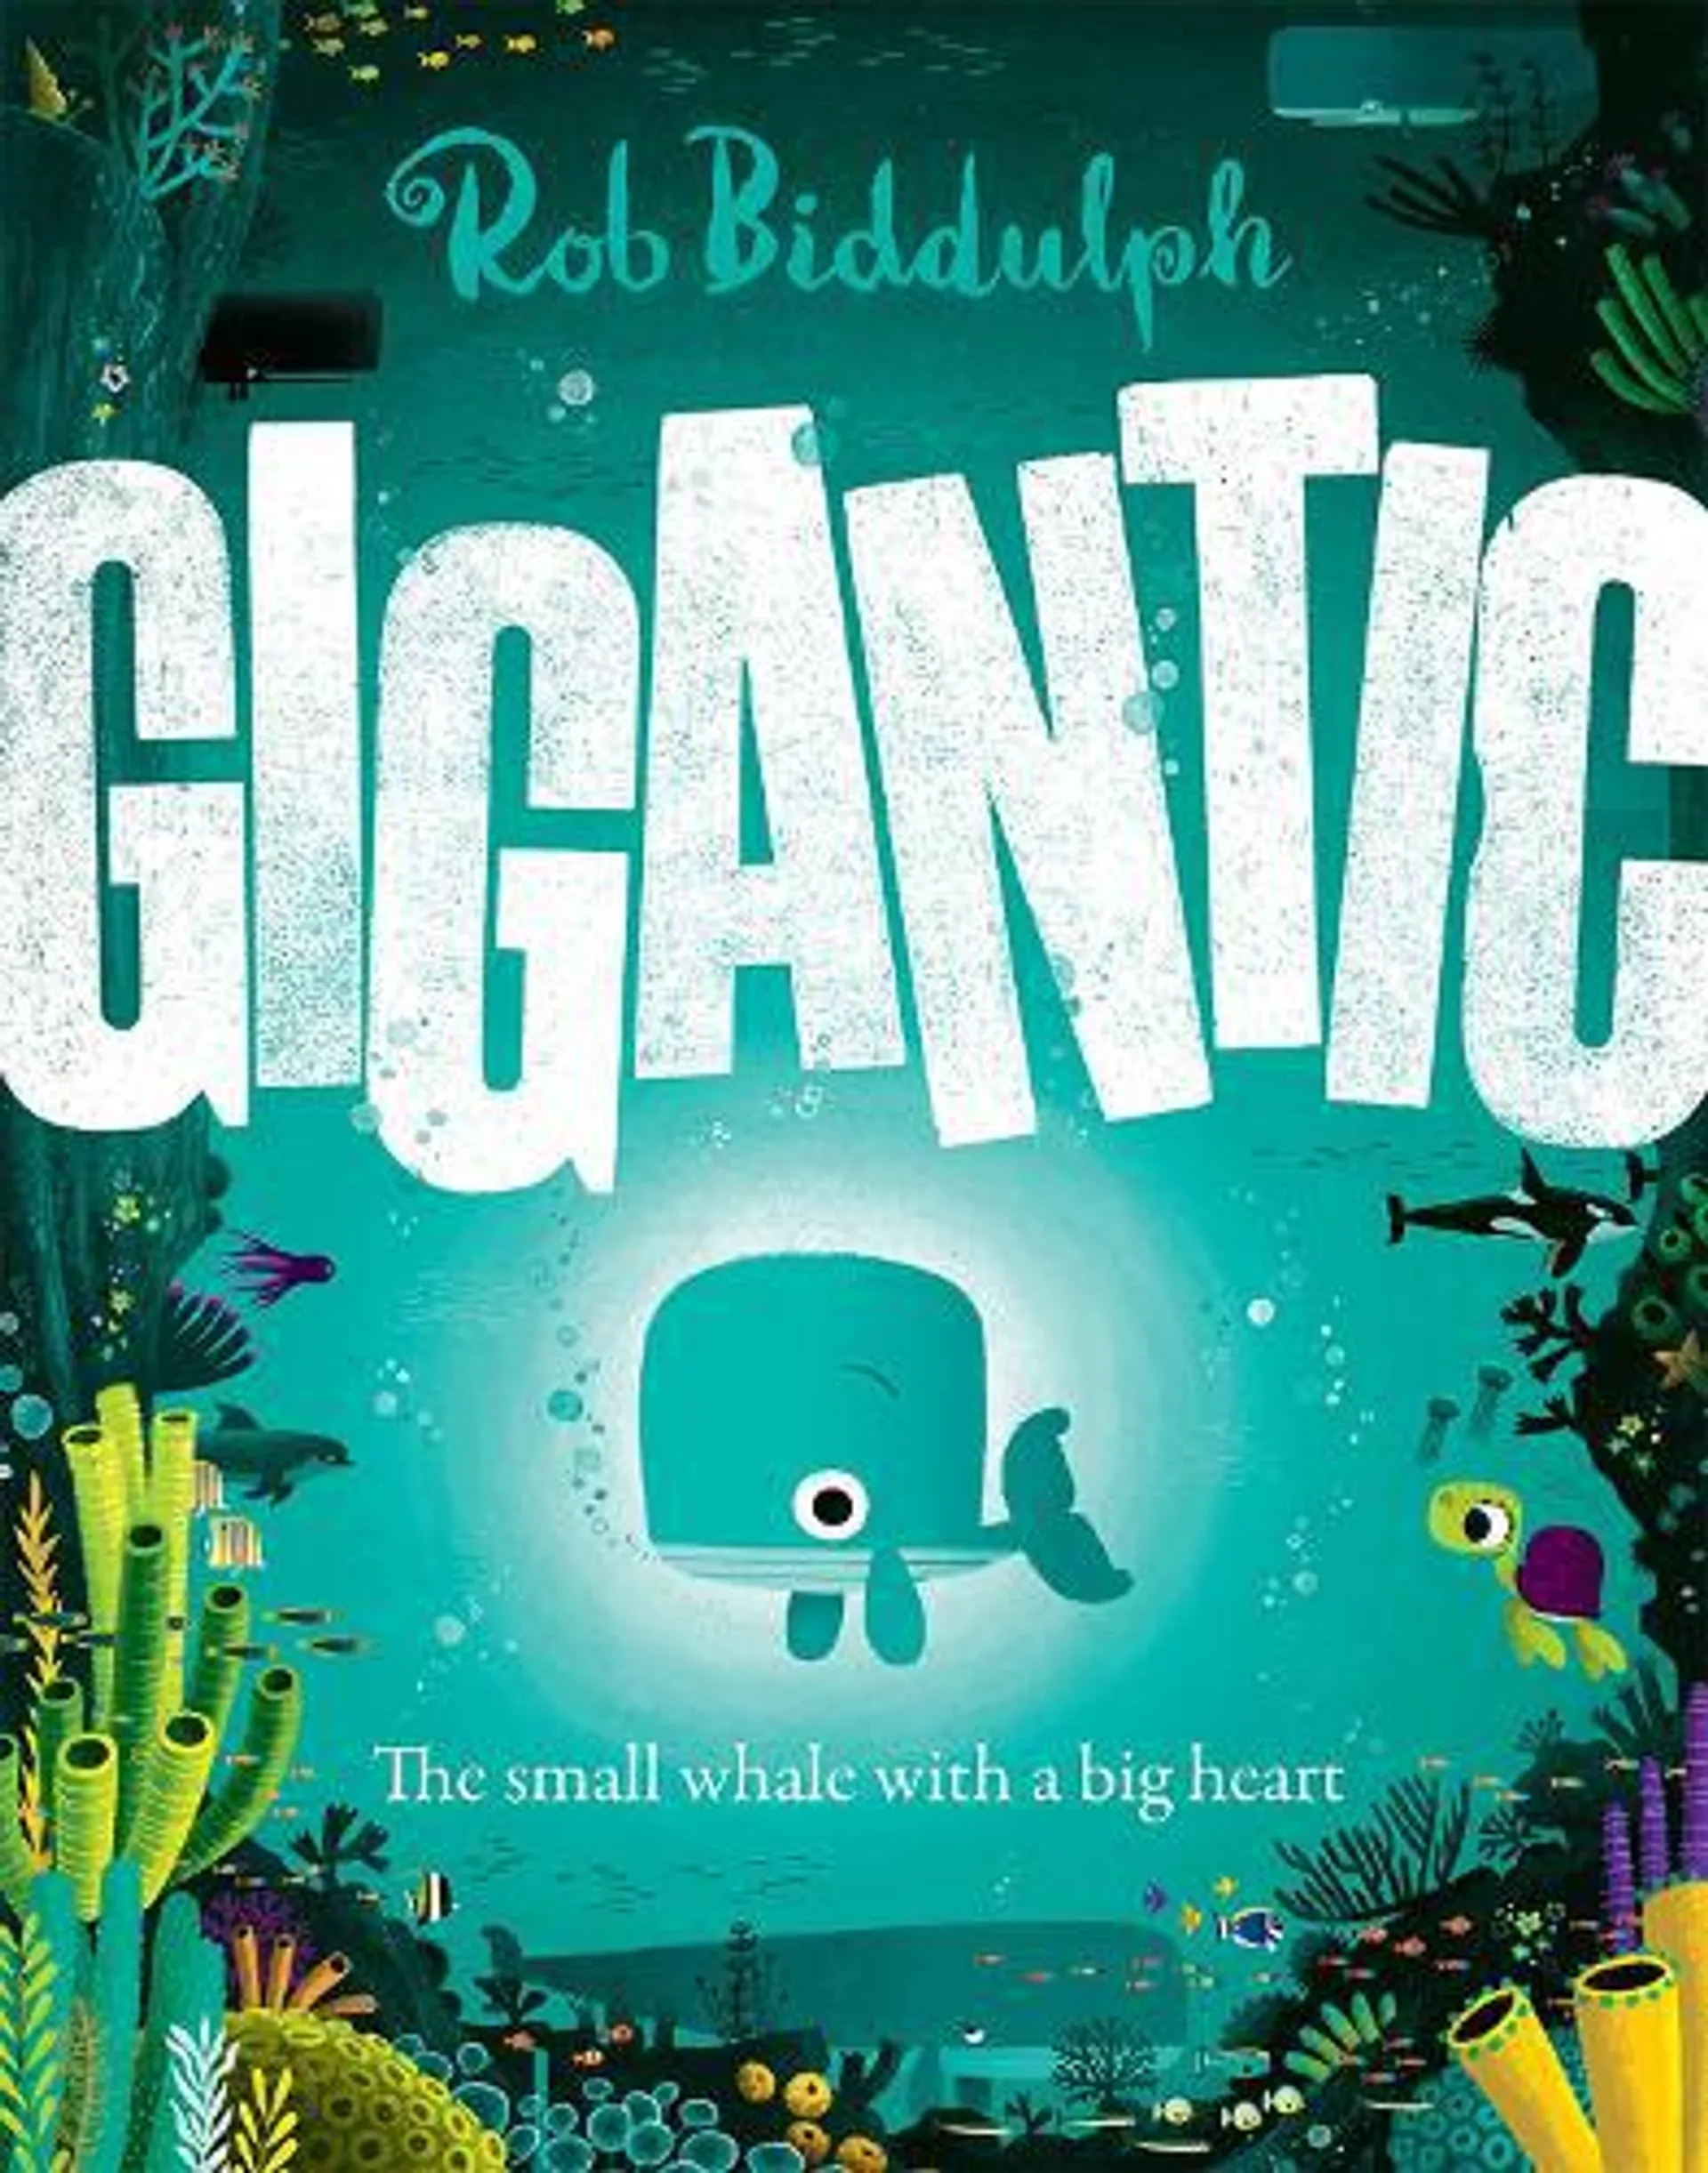 Gigantic (Paperback)